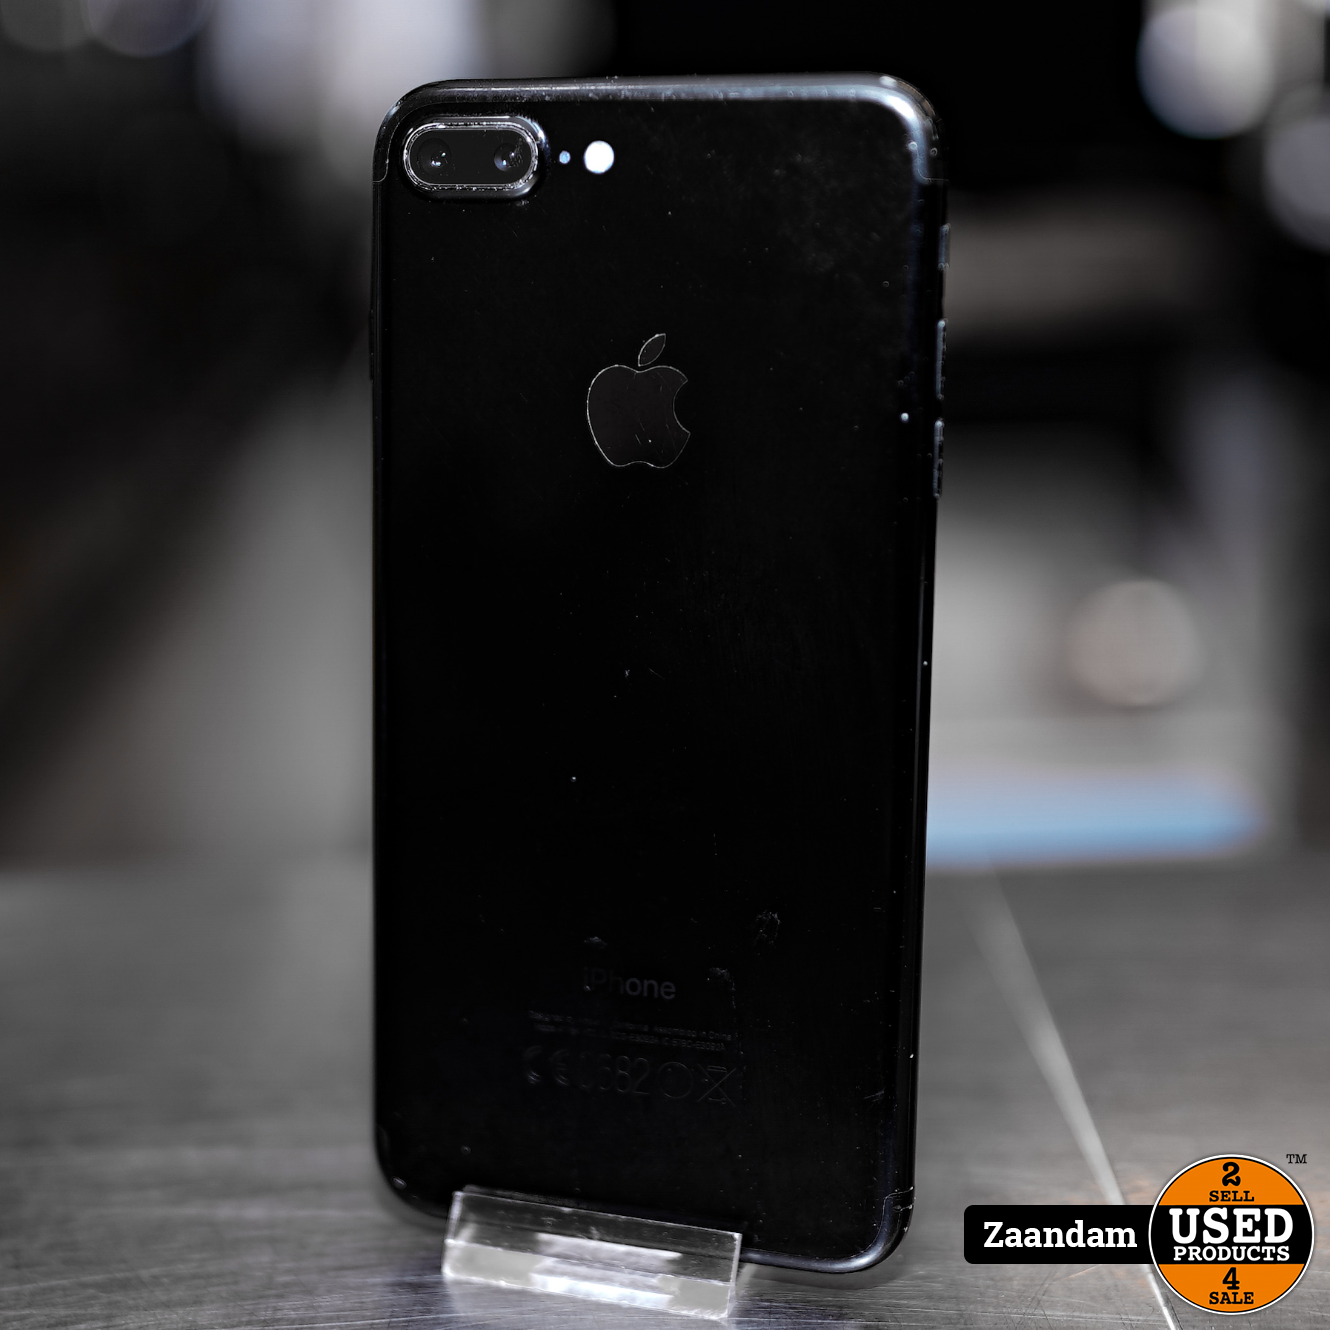 iPhone 7 Plus 128GB Zwart | Incl. - Used Products Zaandam